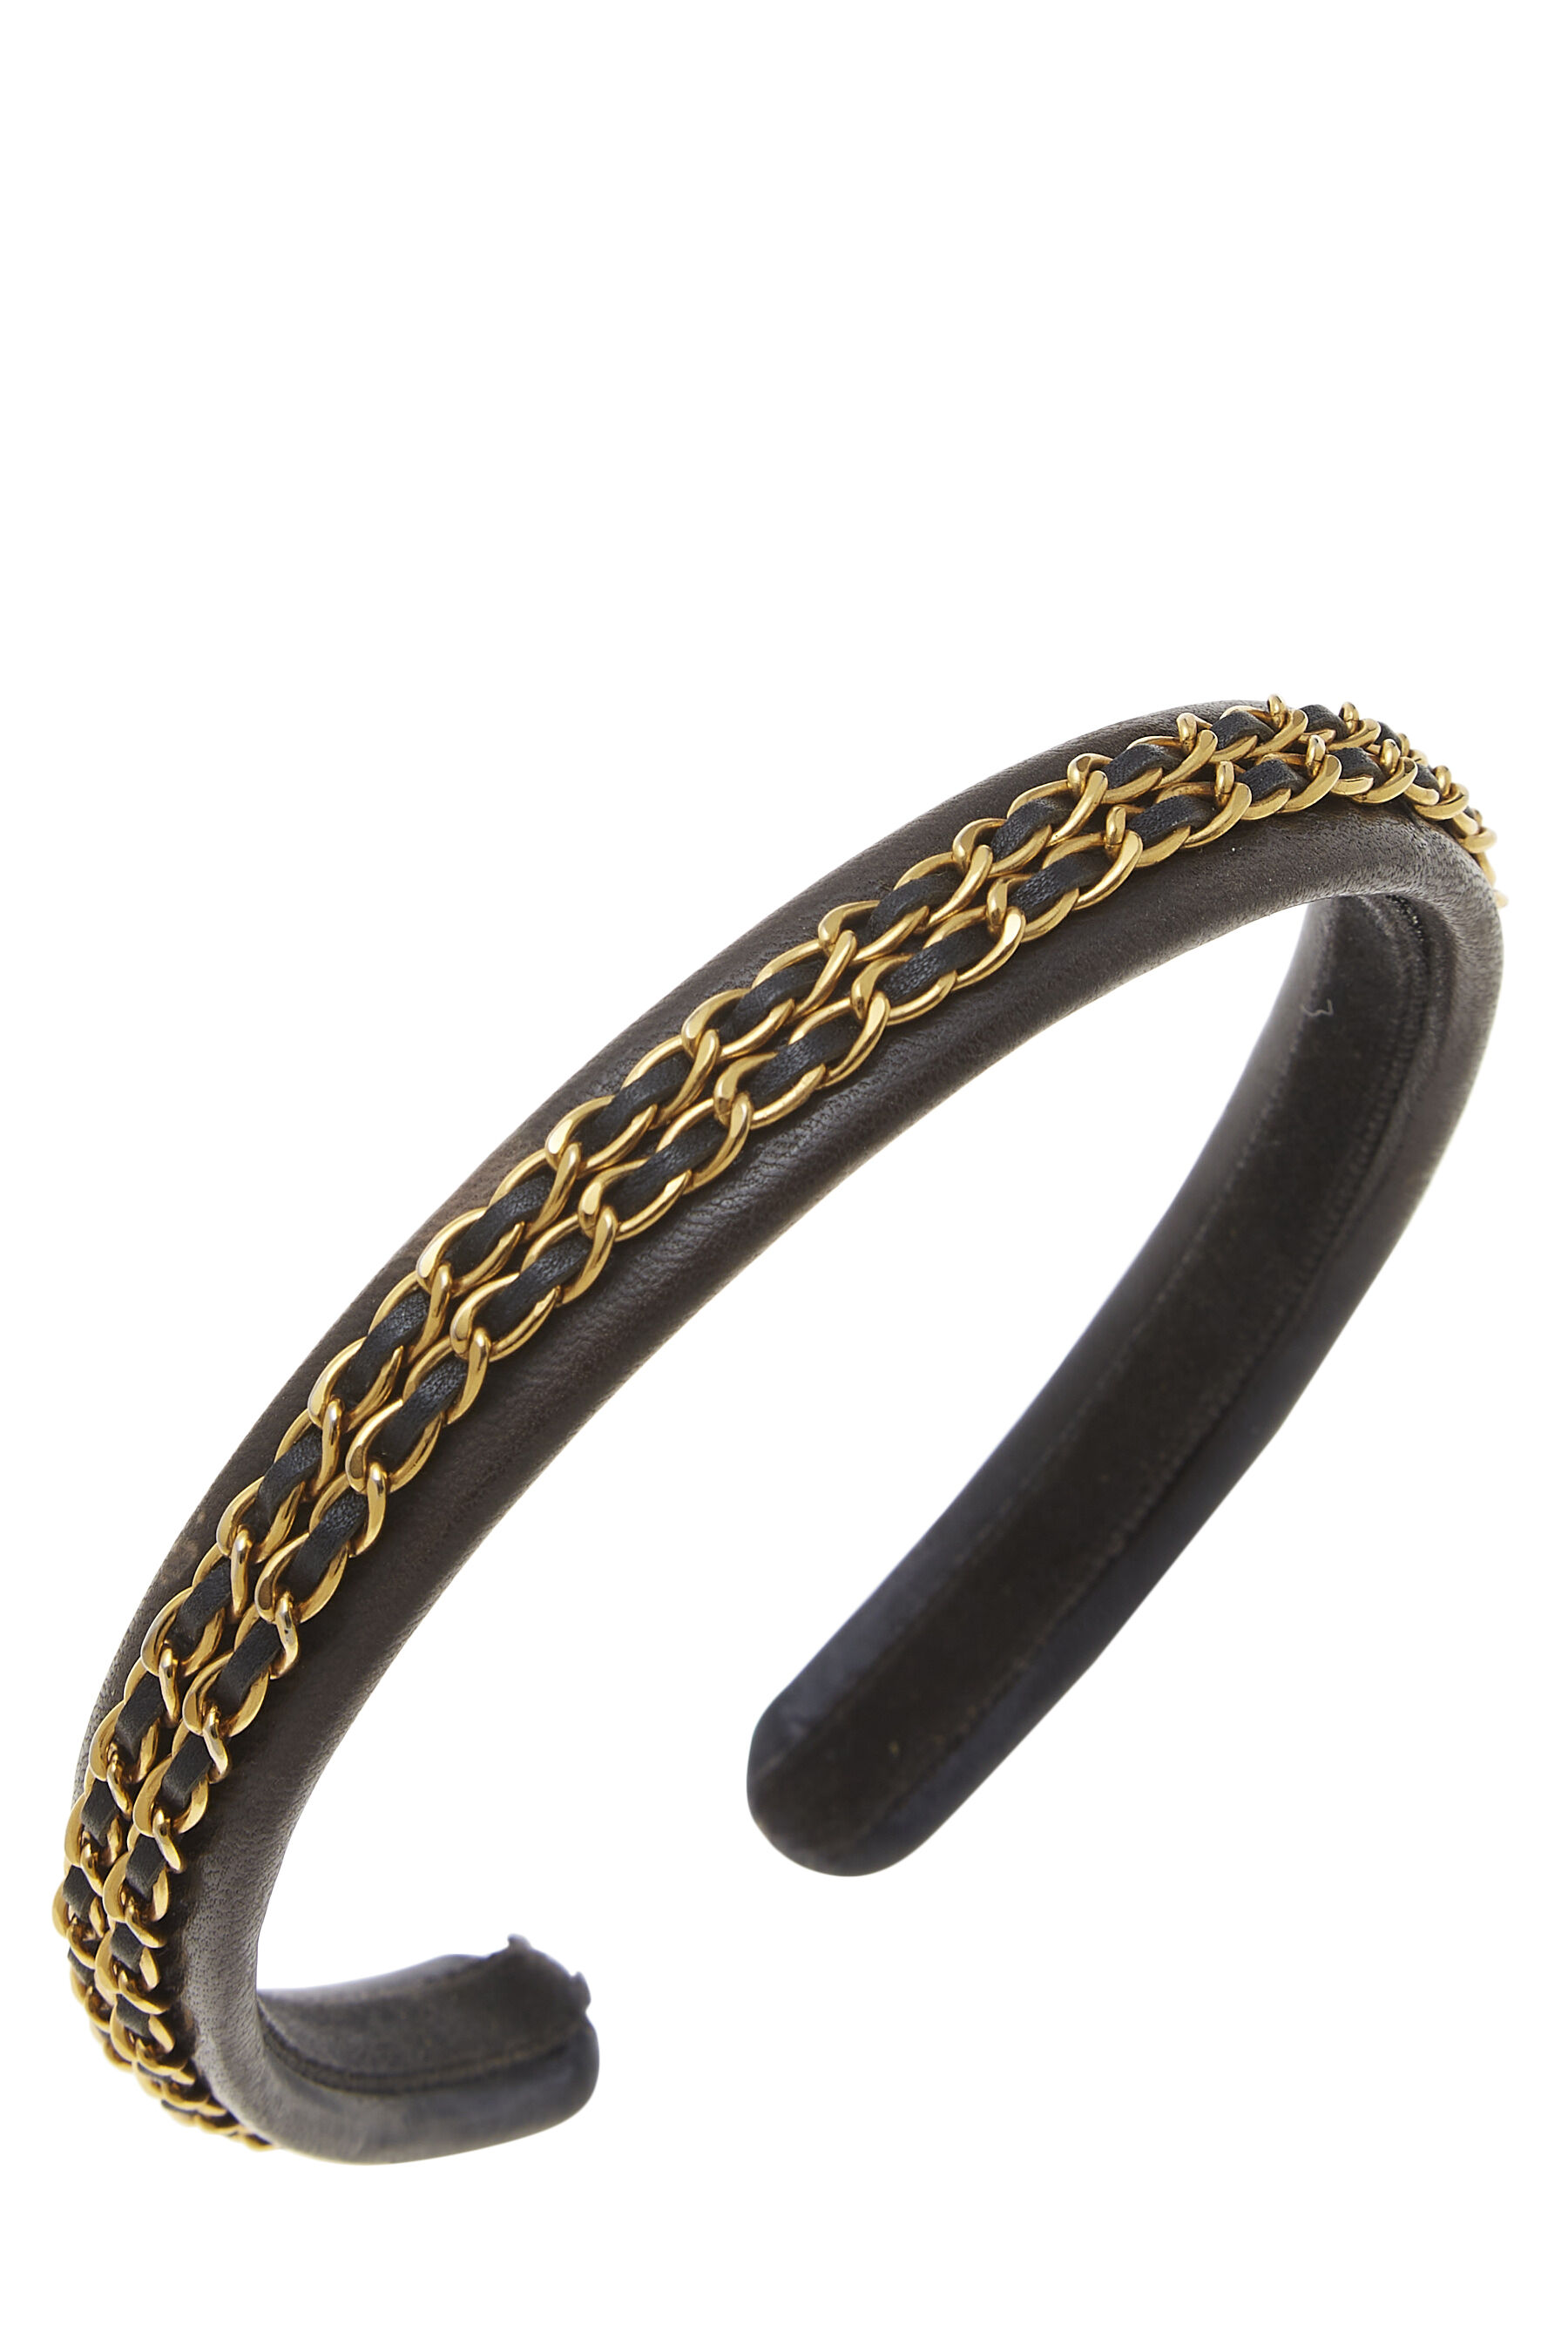 Chanel - Black Leather & Gold Chain Headband